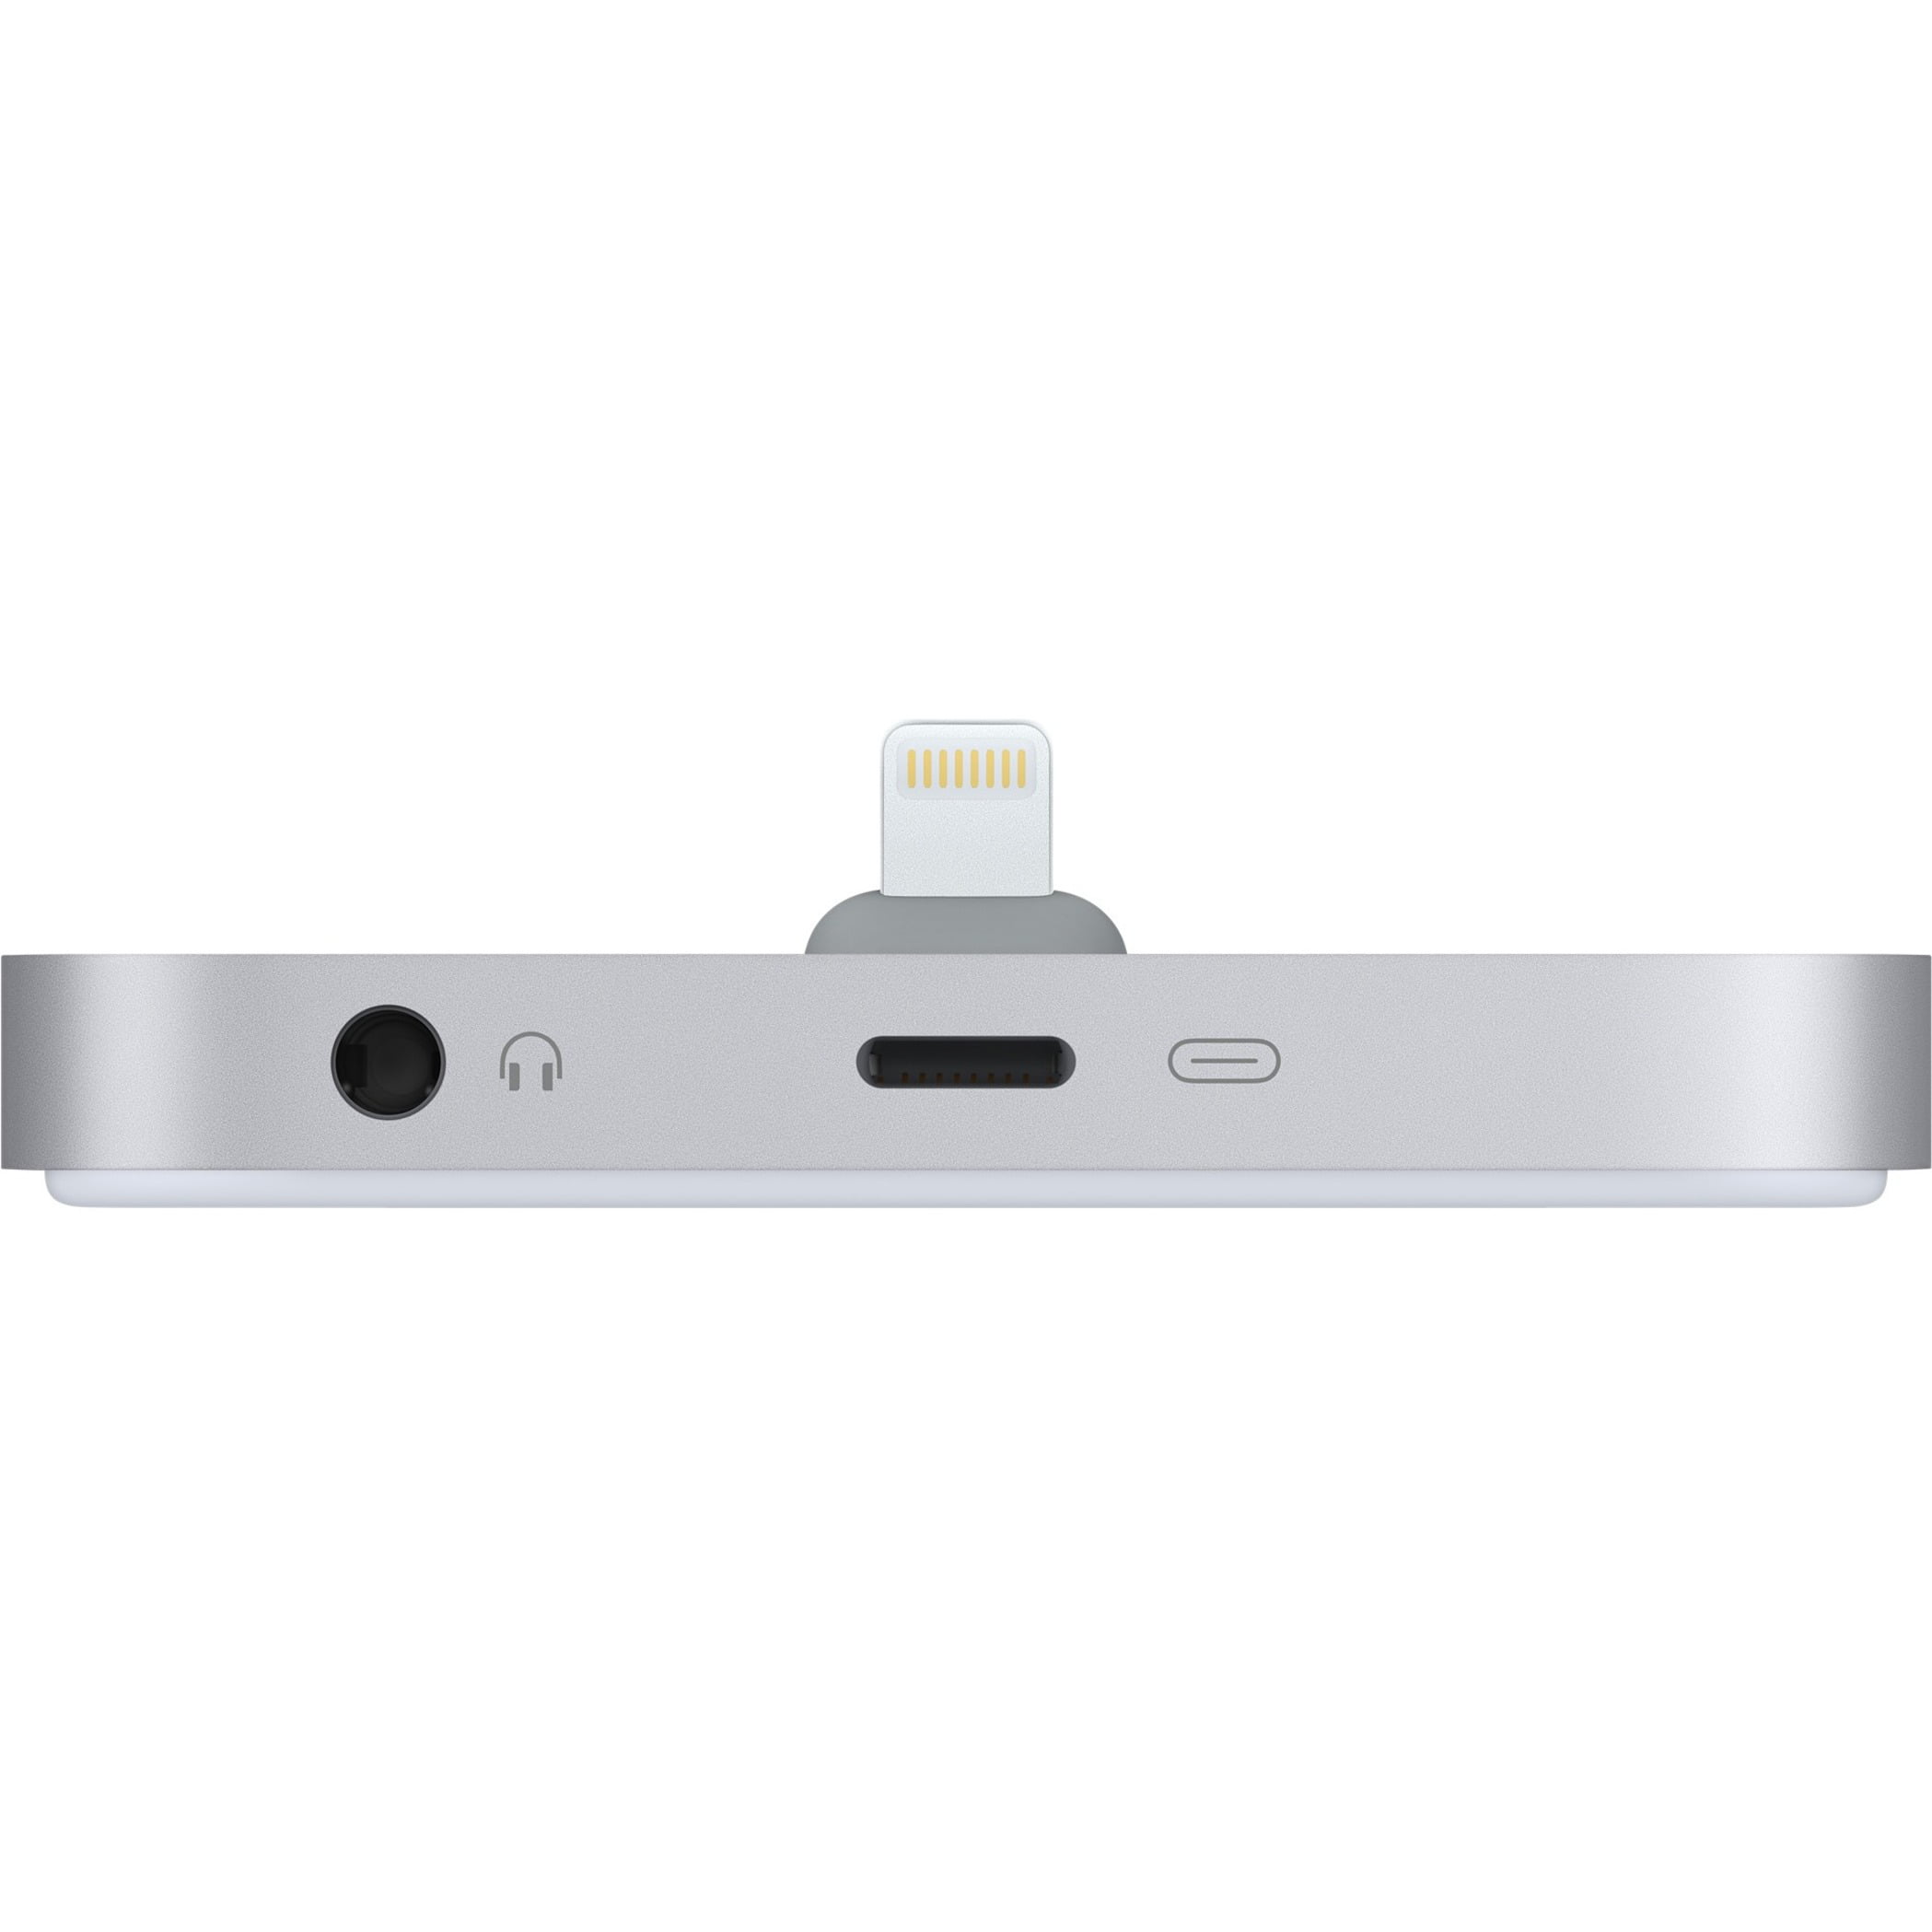 Apple iPhone Lightning Dock - Gold - Walmart.com